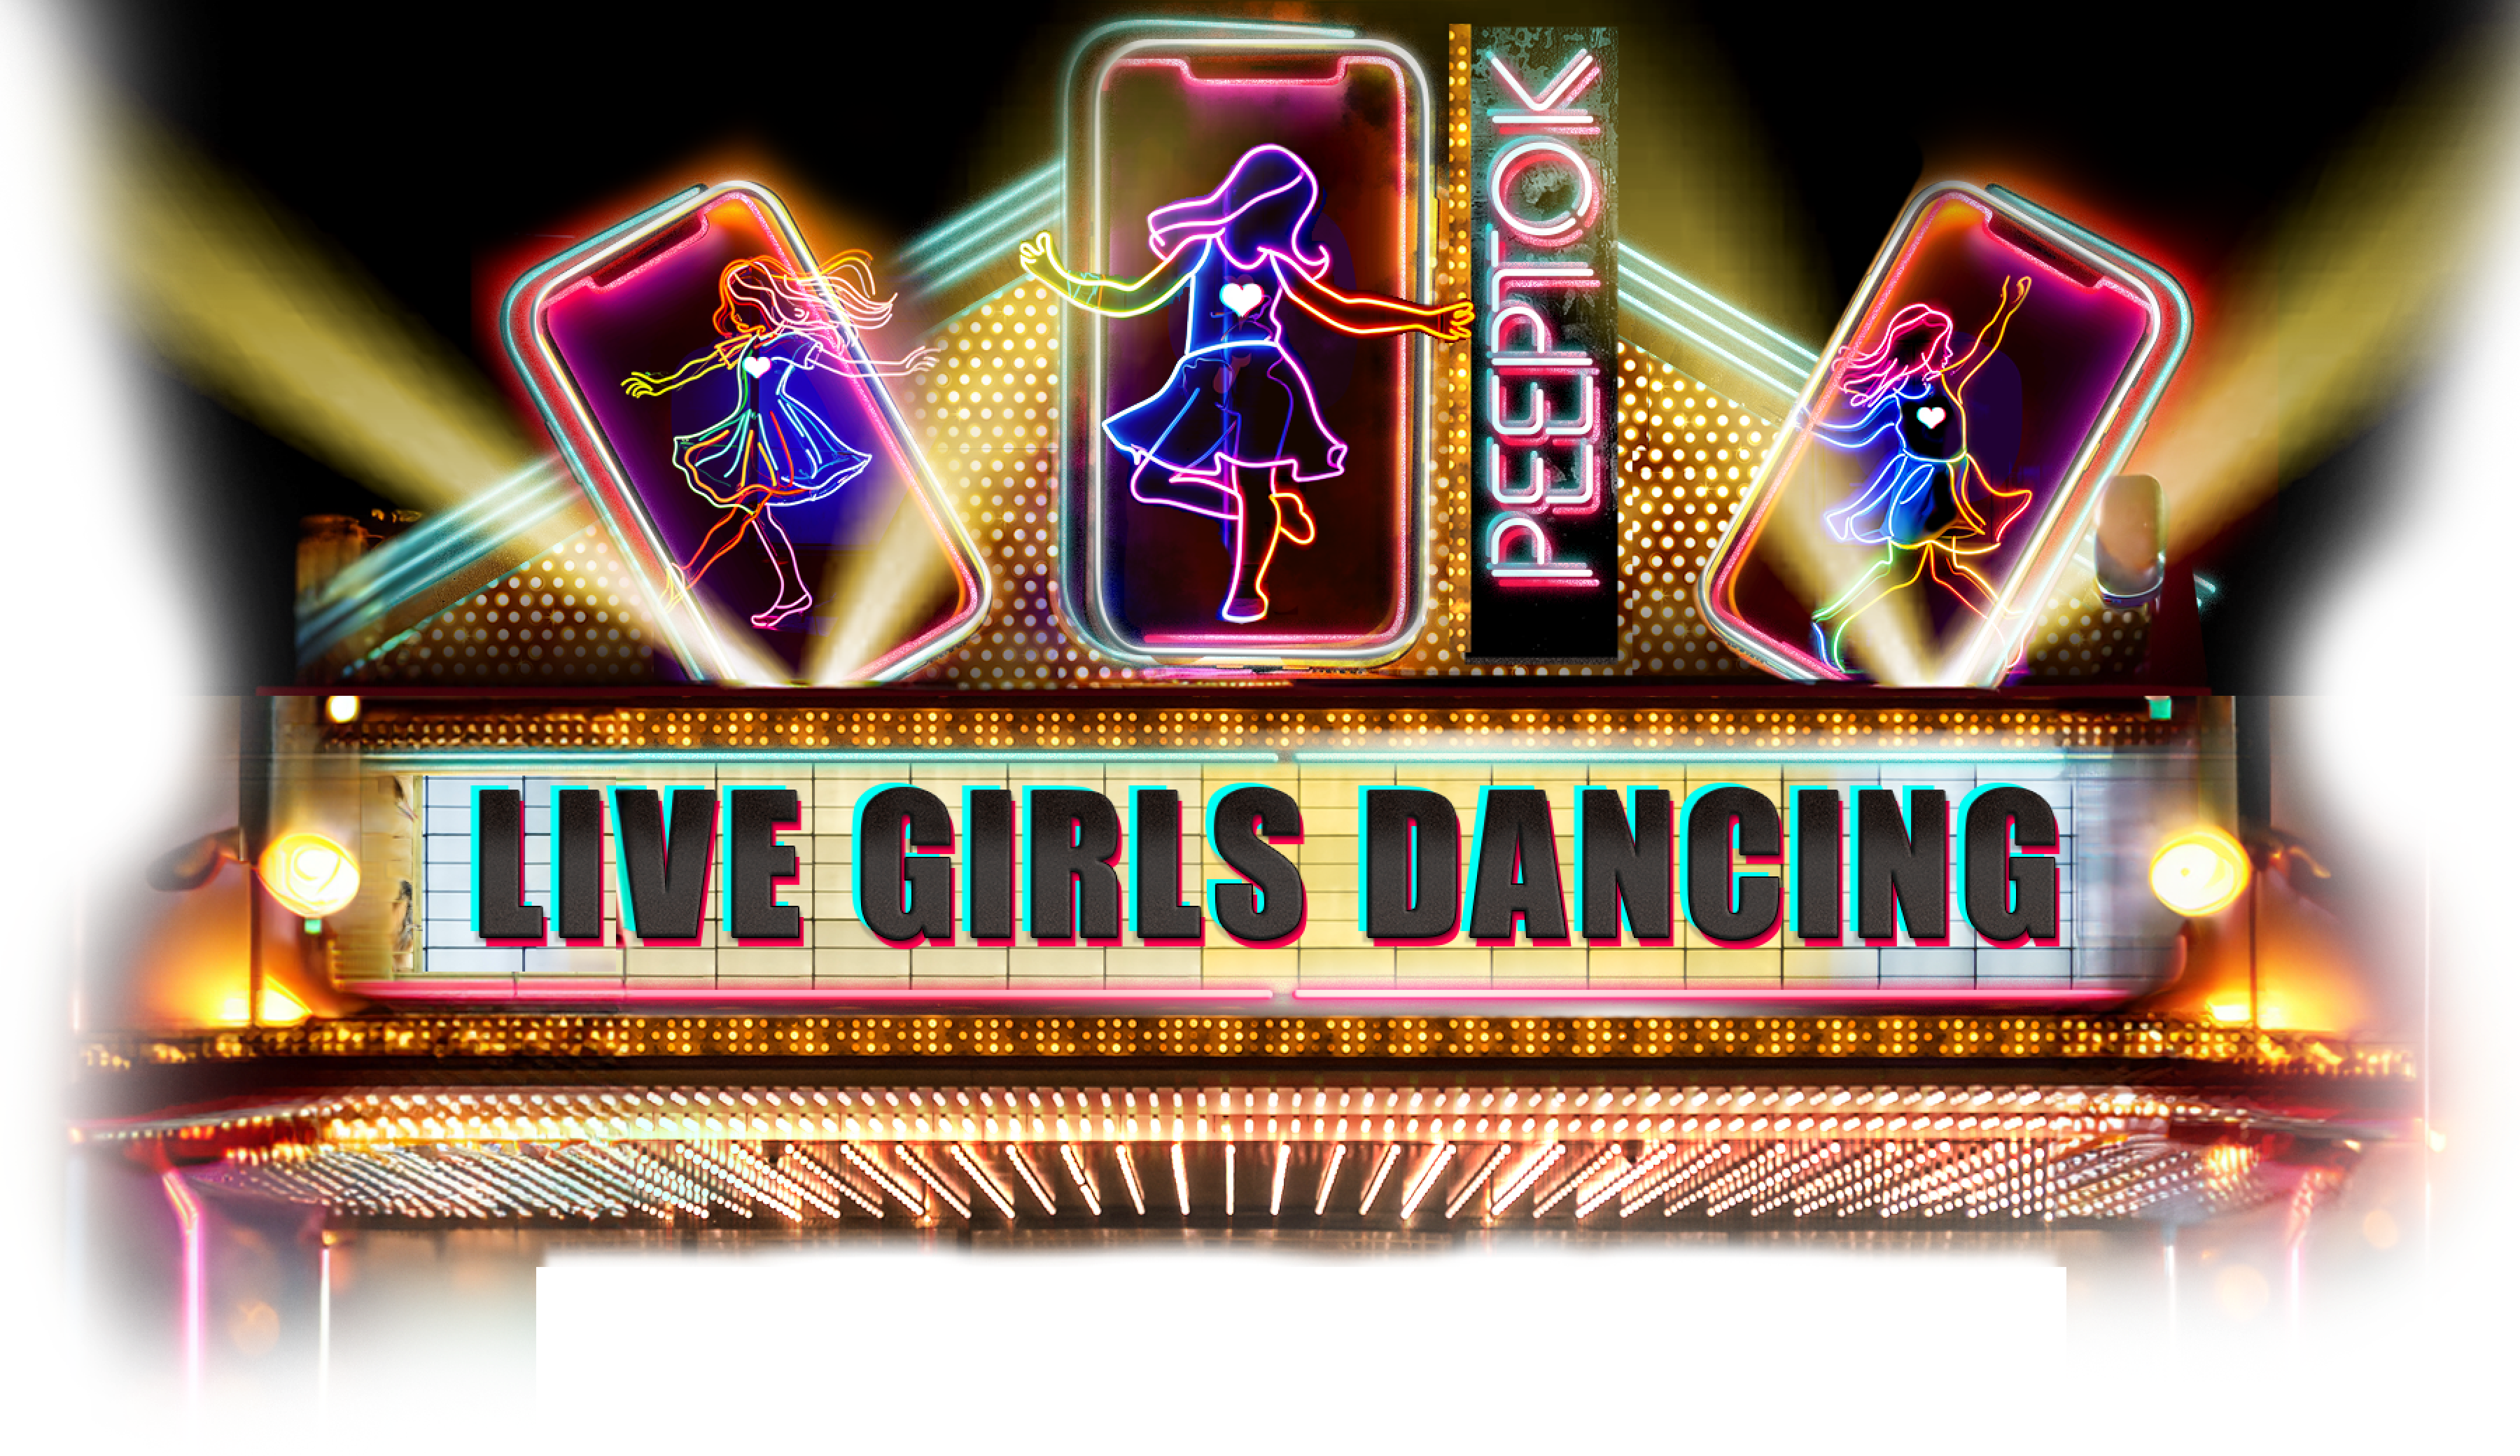 Live Girls Dancing